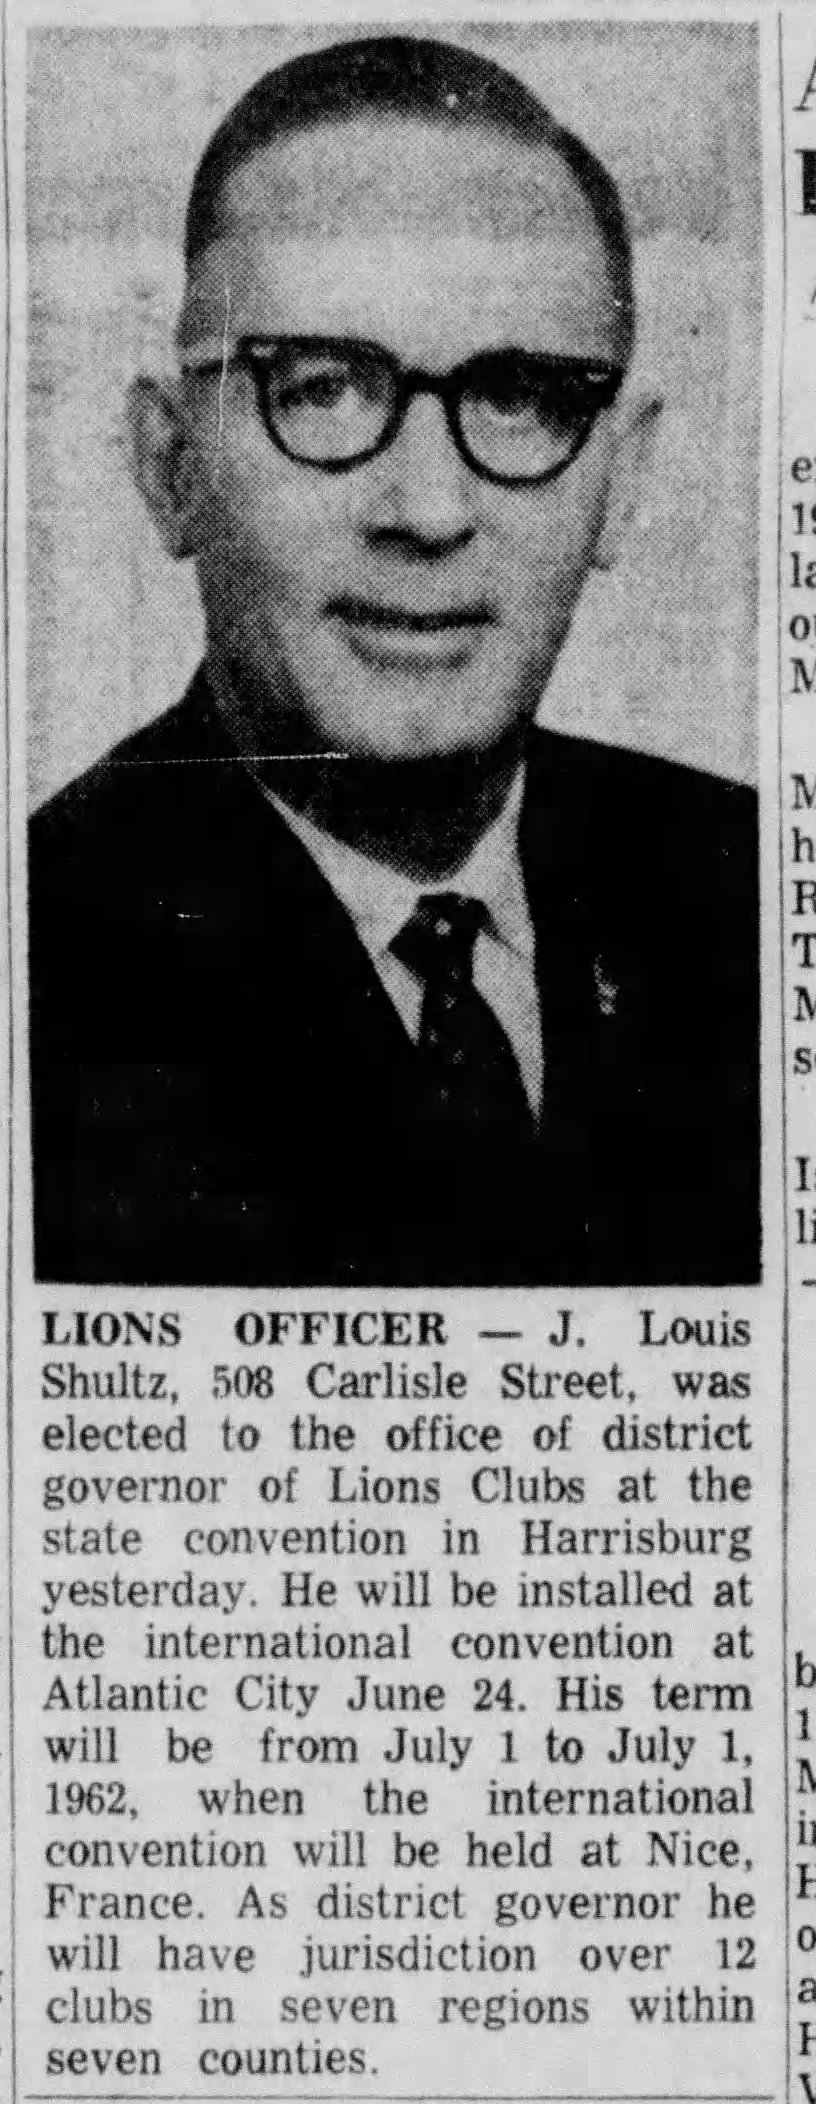 J. Louis Shultz, District Governor, Lions Club